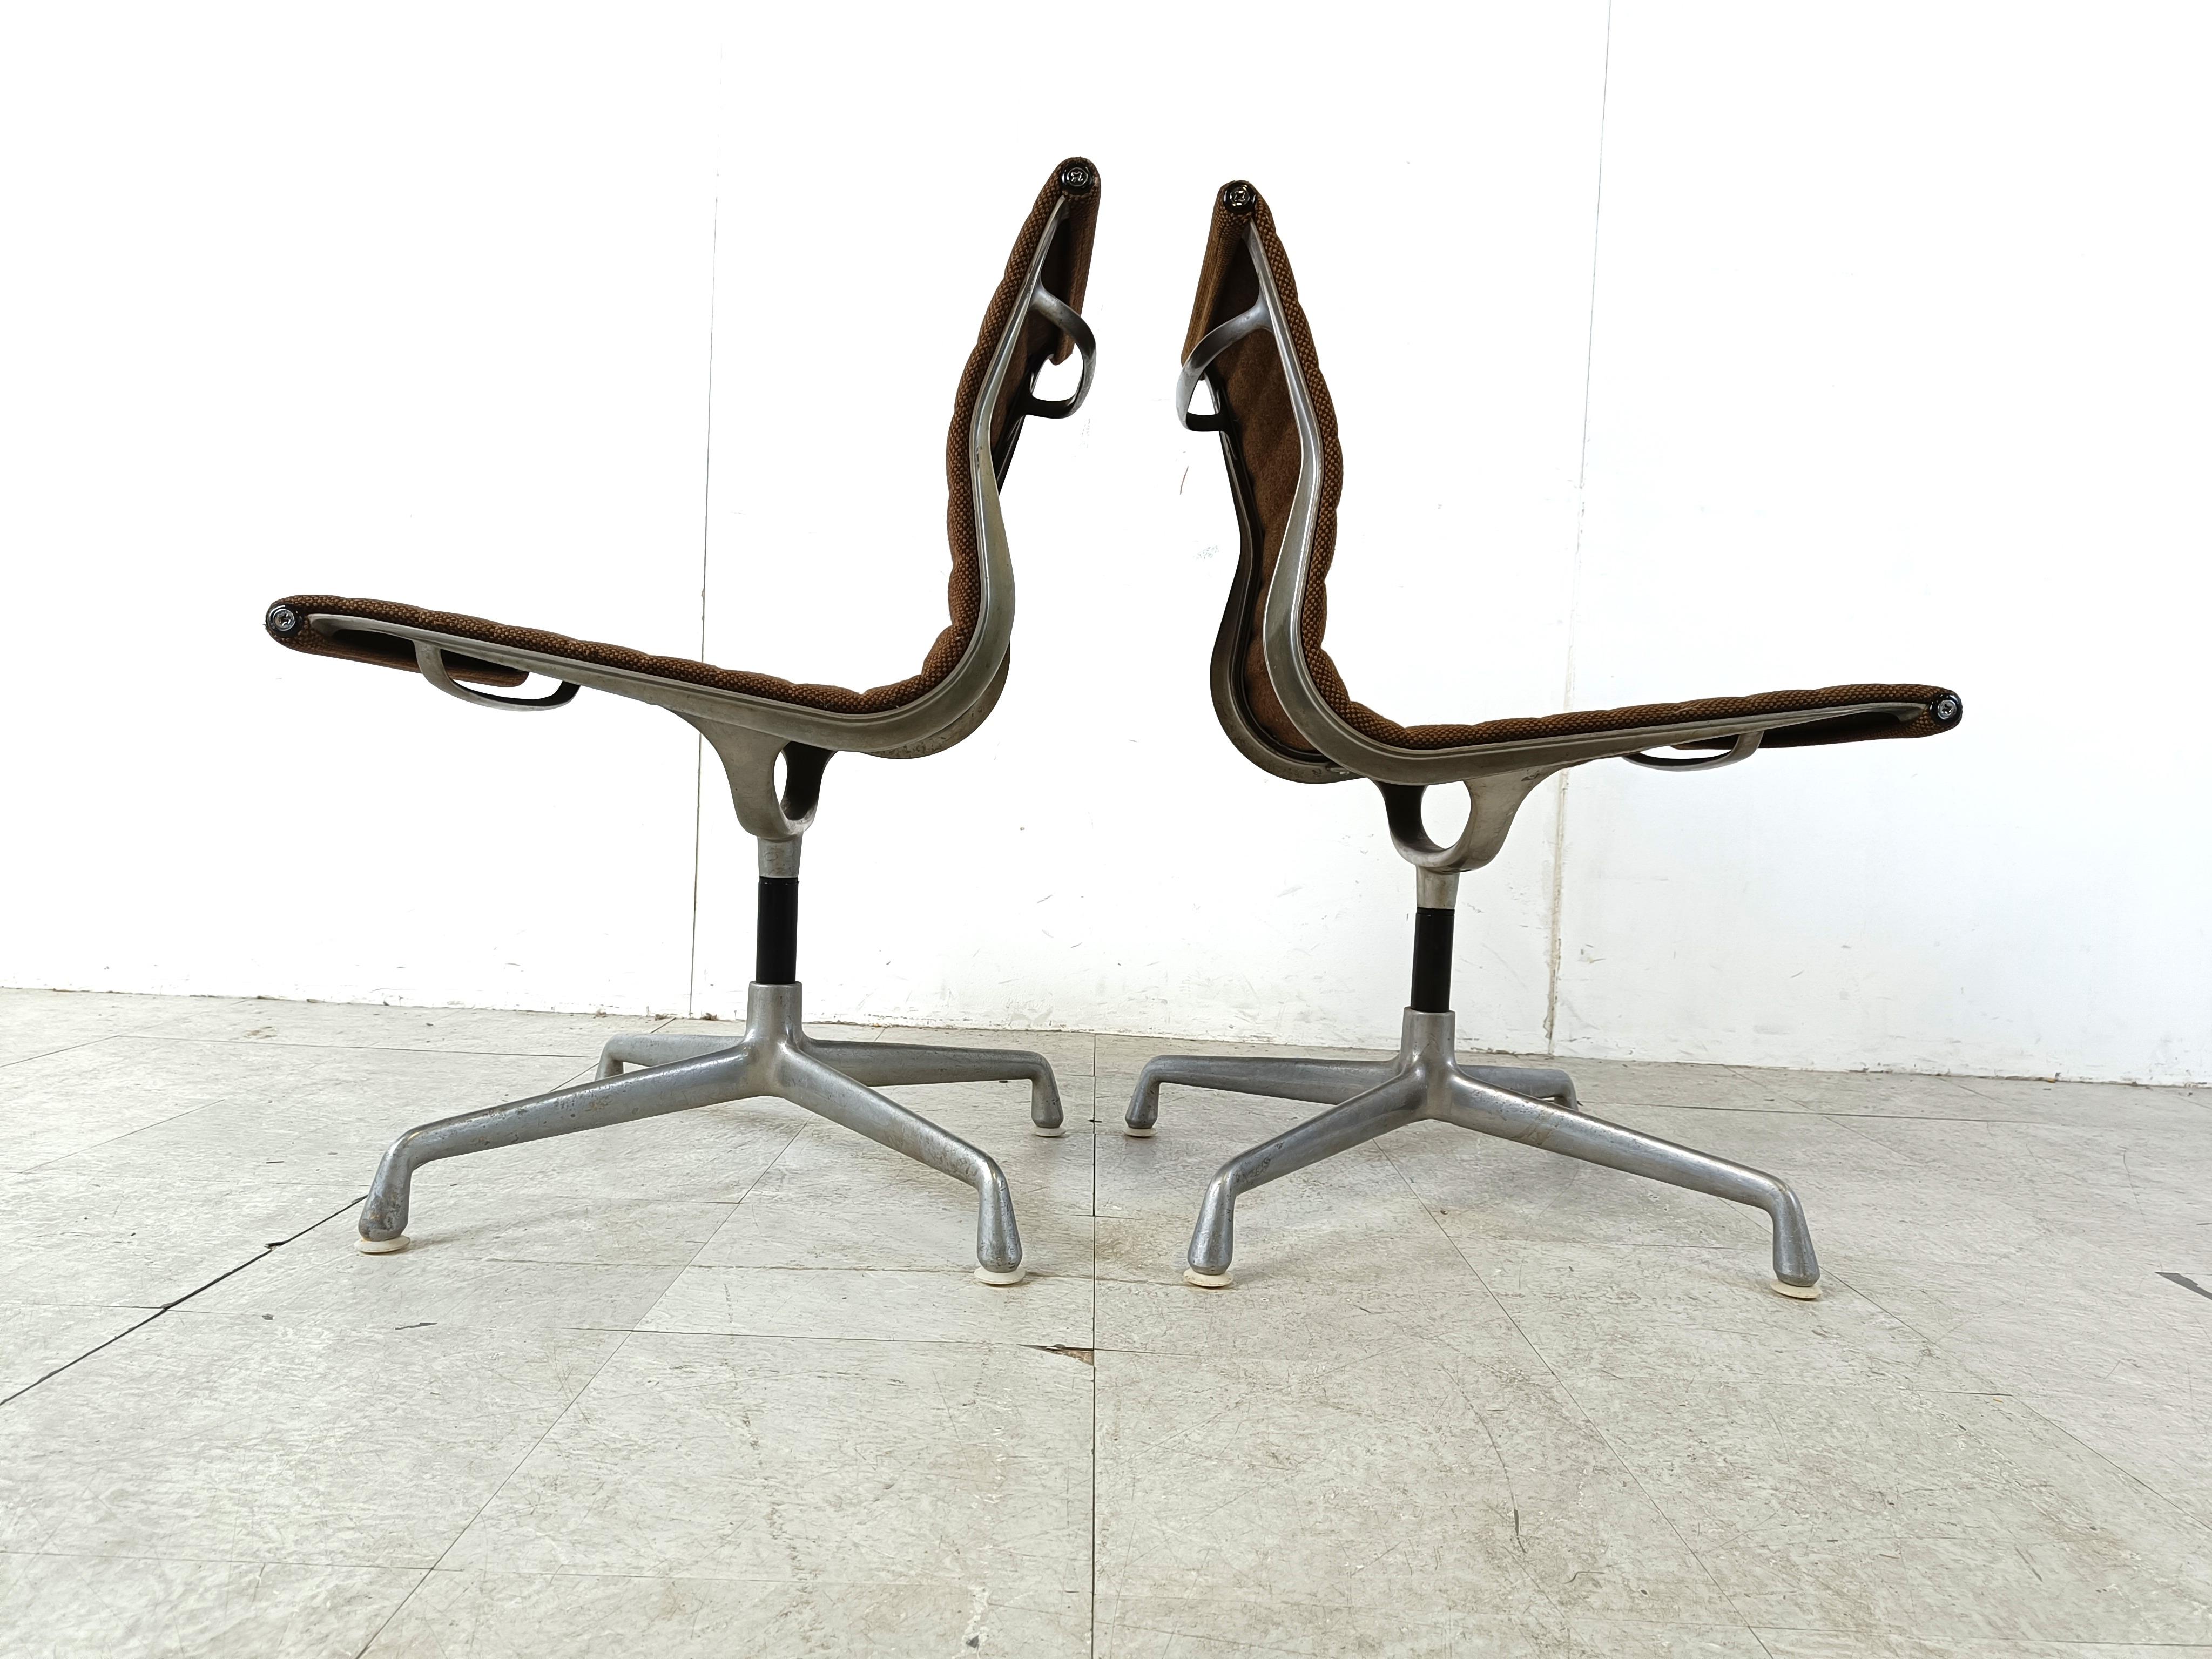 American Vintage eames desk chairs EA108 for herman miller, 1970s - set of 2 For Sale